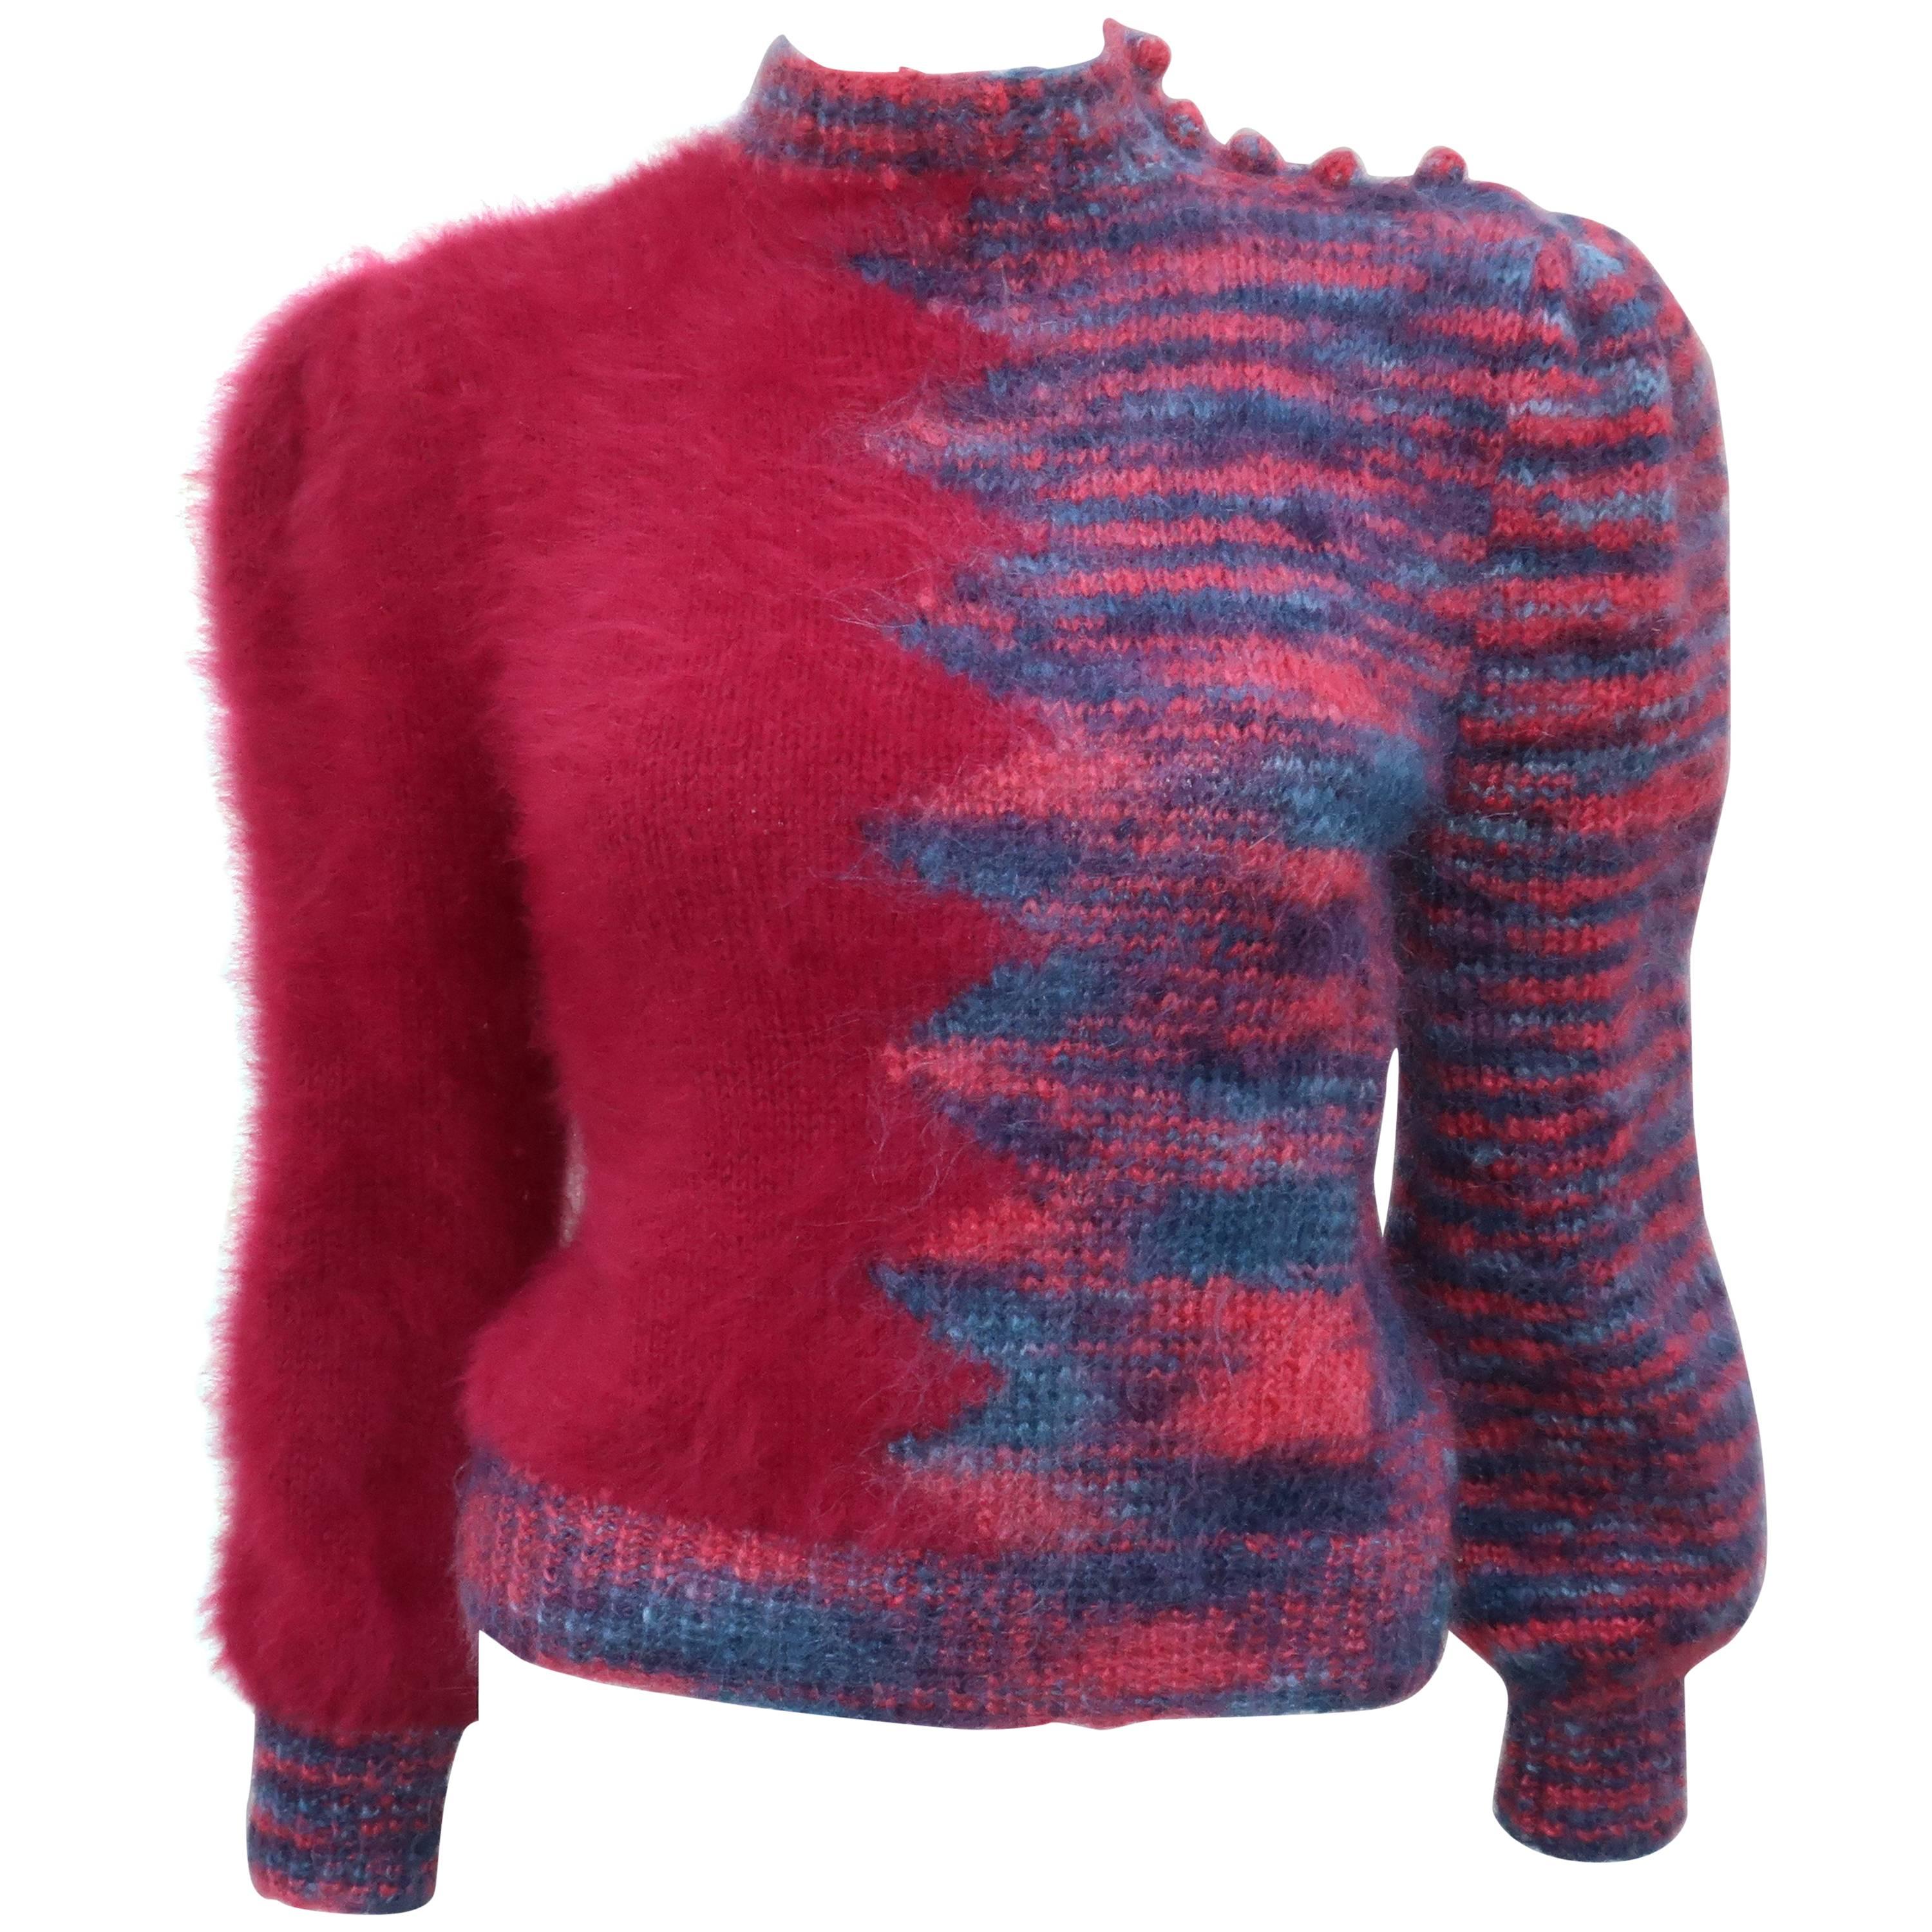 1970s Cranberry Red Angora Sweater